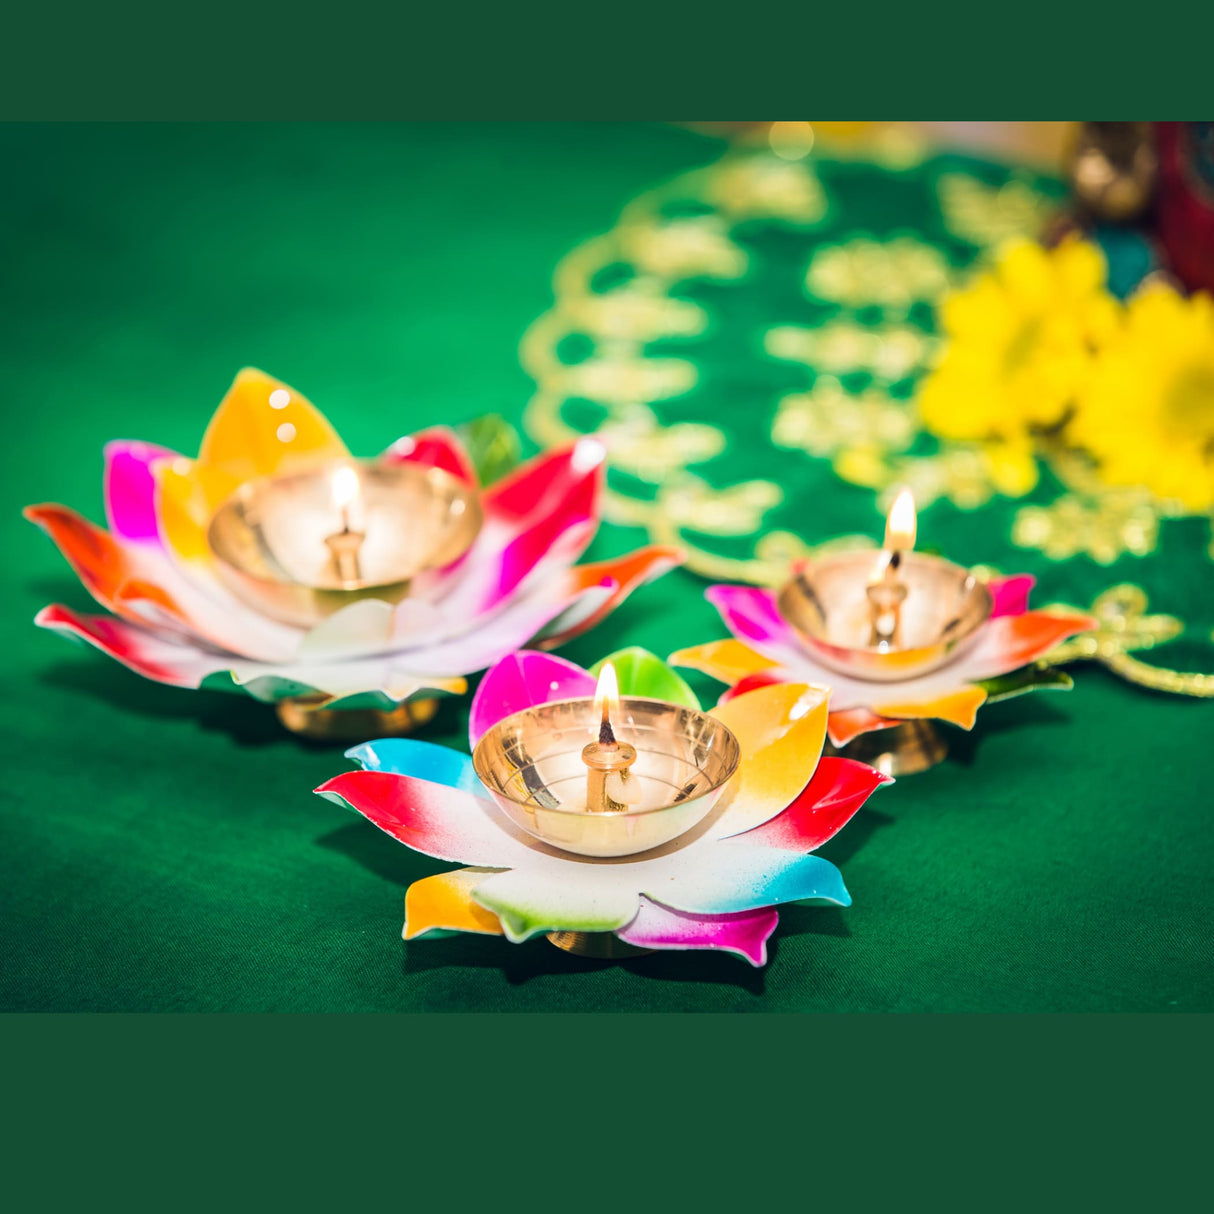 Lotus brass diya diwali decoration gift lamp deewali decor